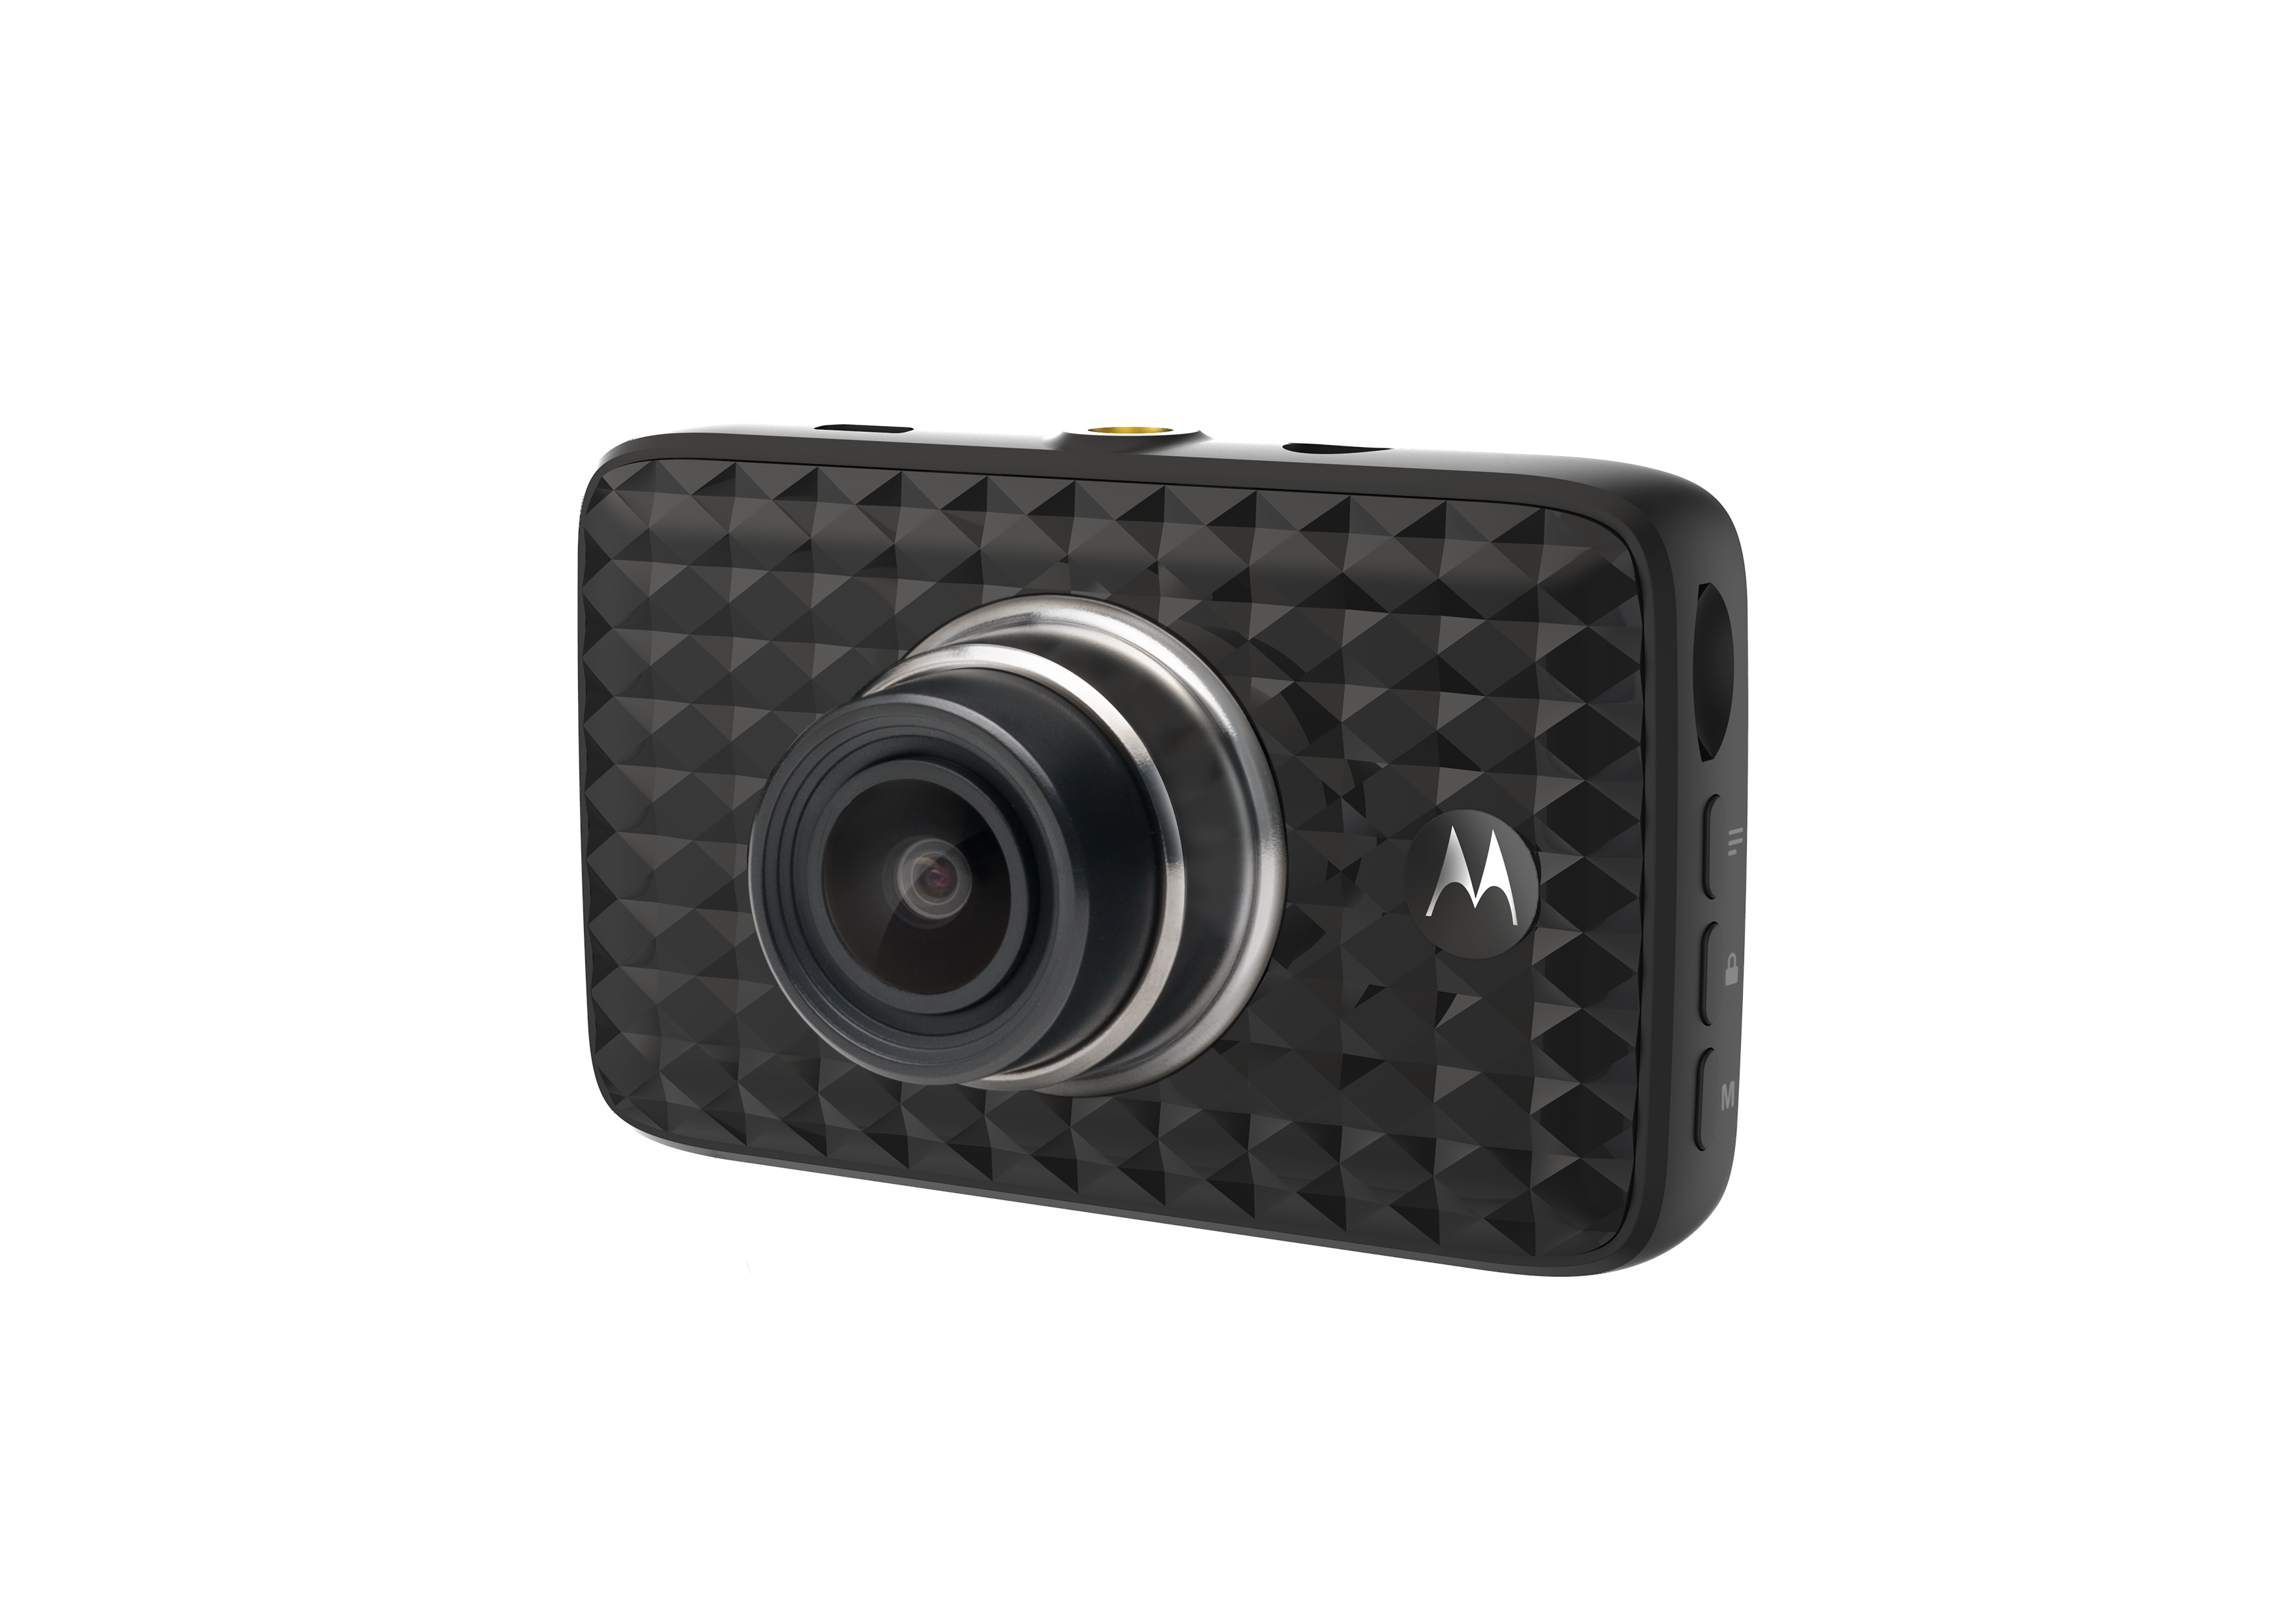 Motorola Dash Cam MDC300GW Full HD (1080p) Dash Camera with GPS and WiFi black